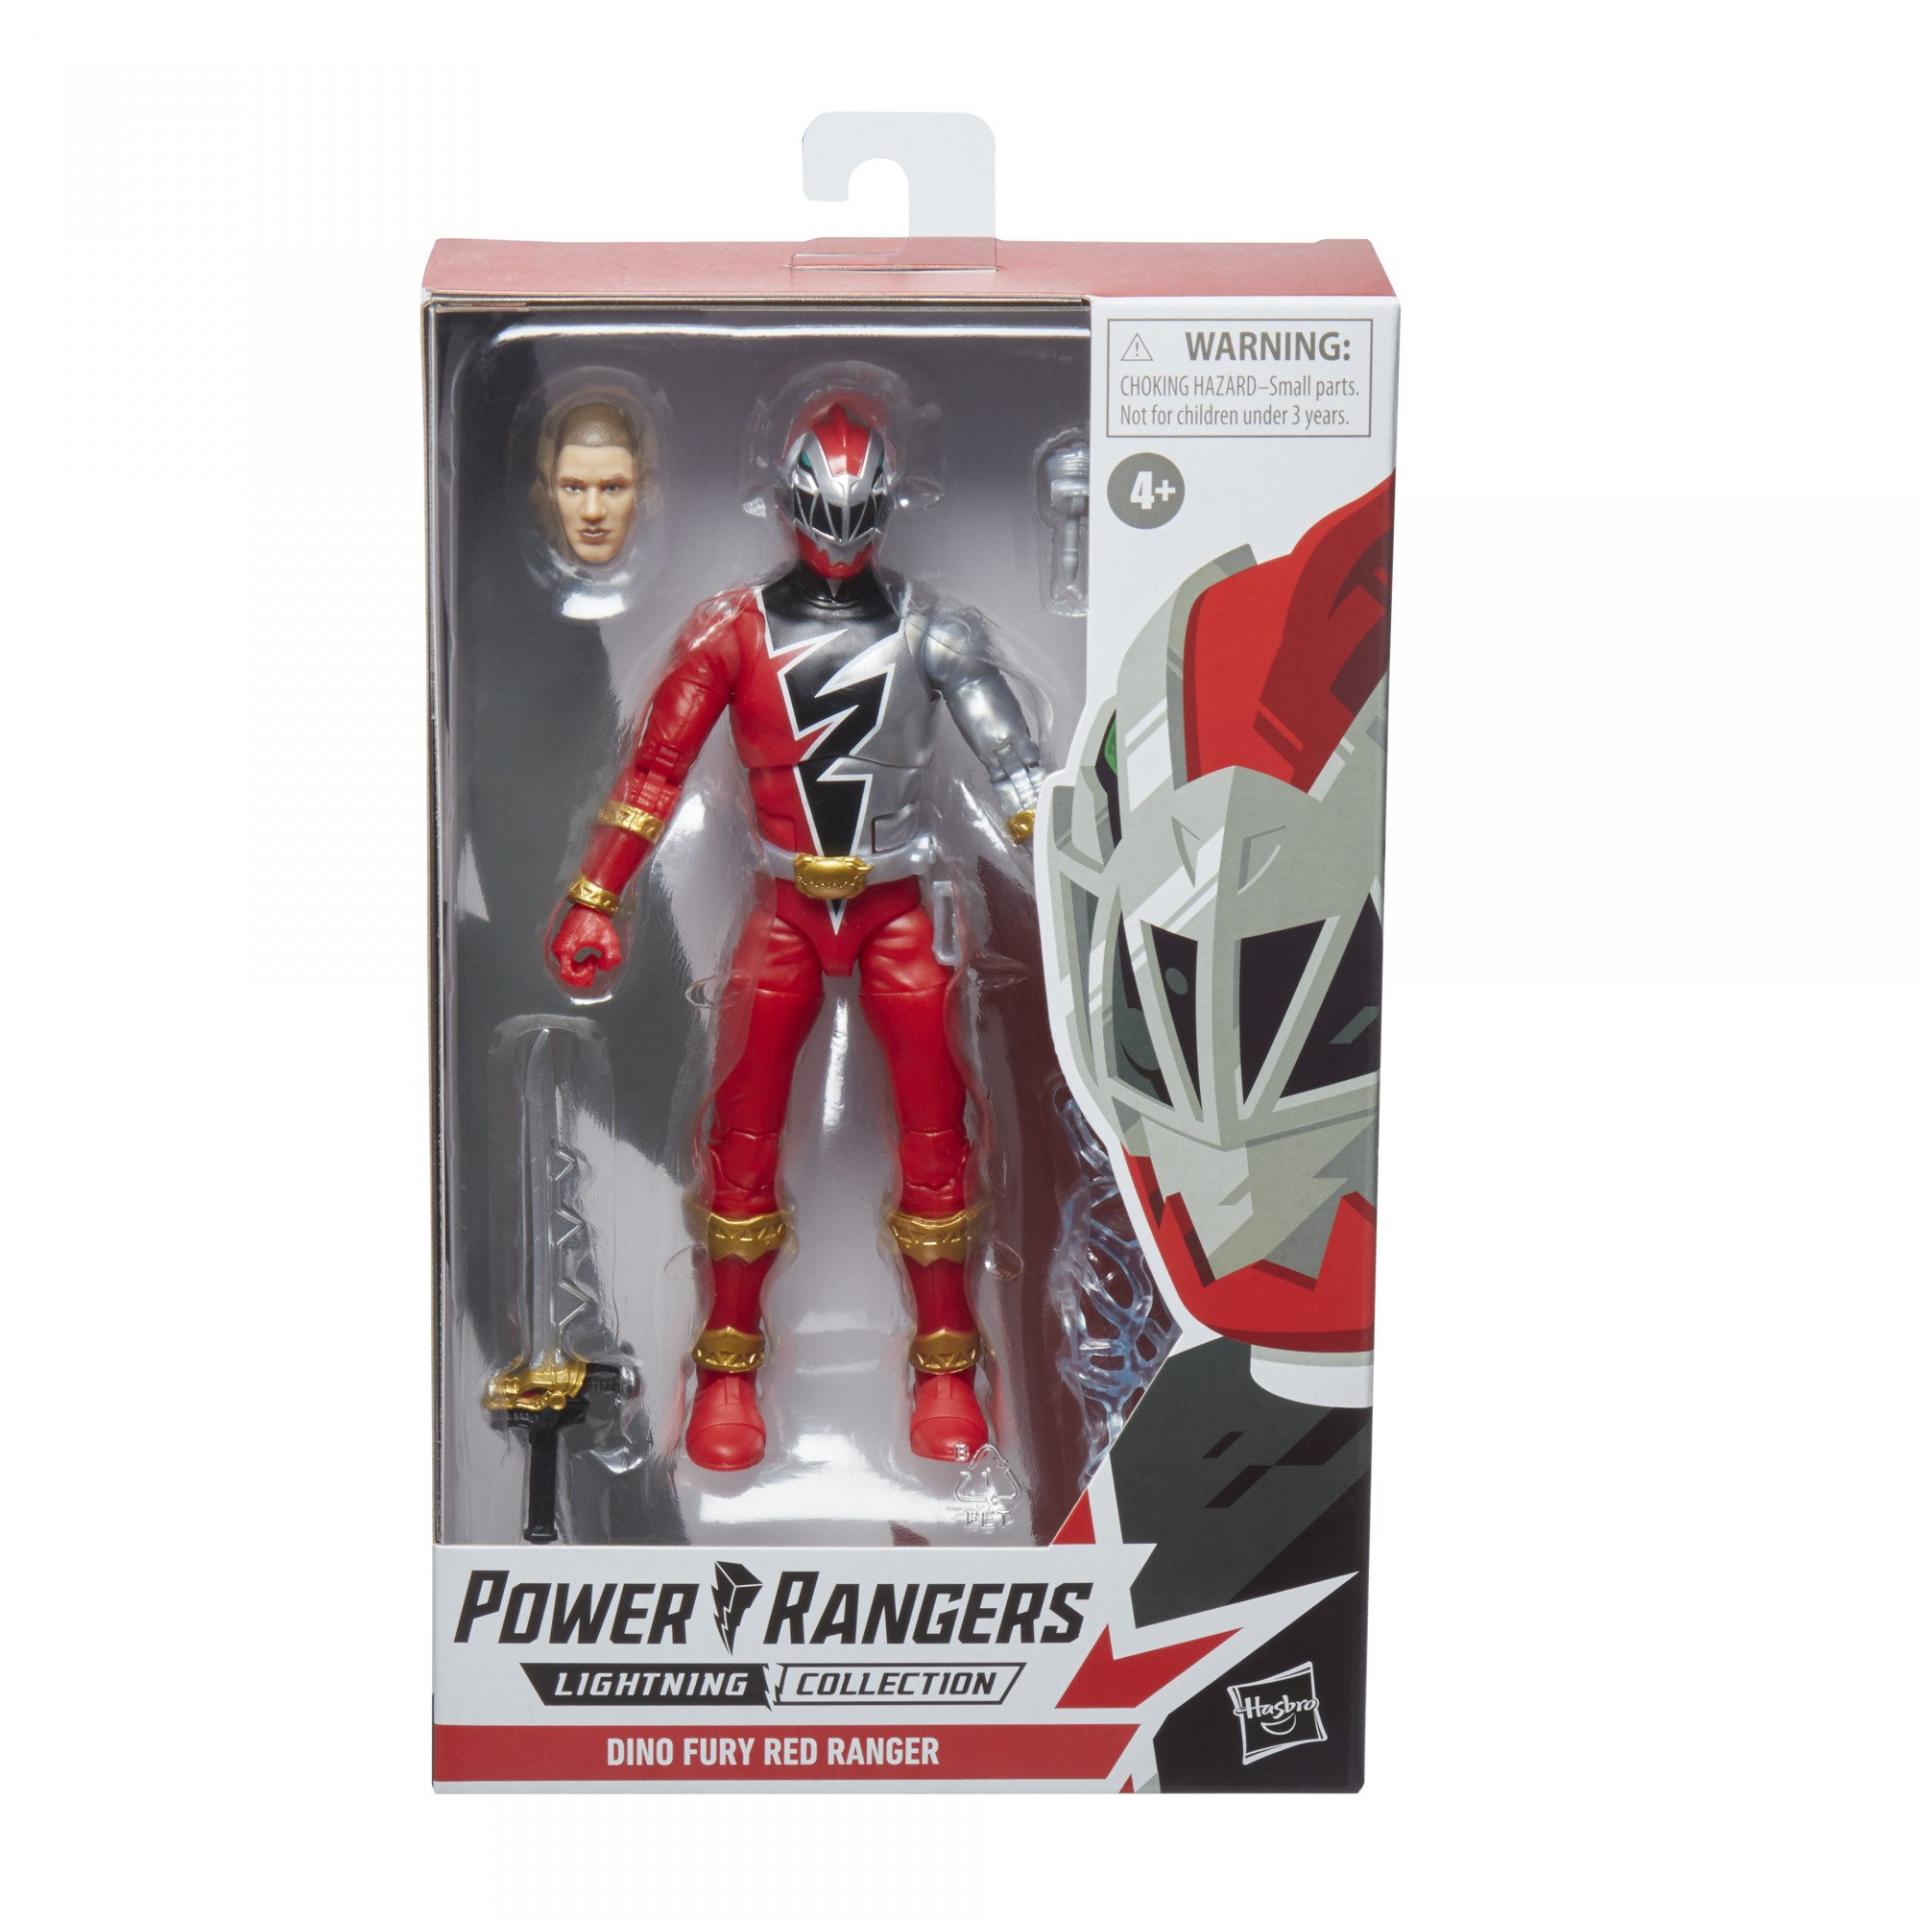 Power rangers lightning collection dino fury red ranger6